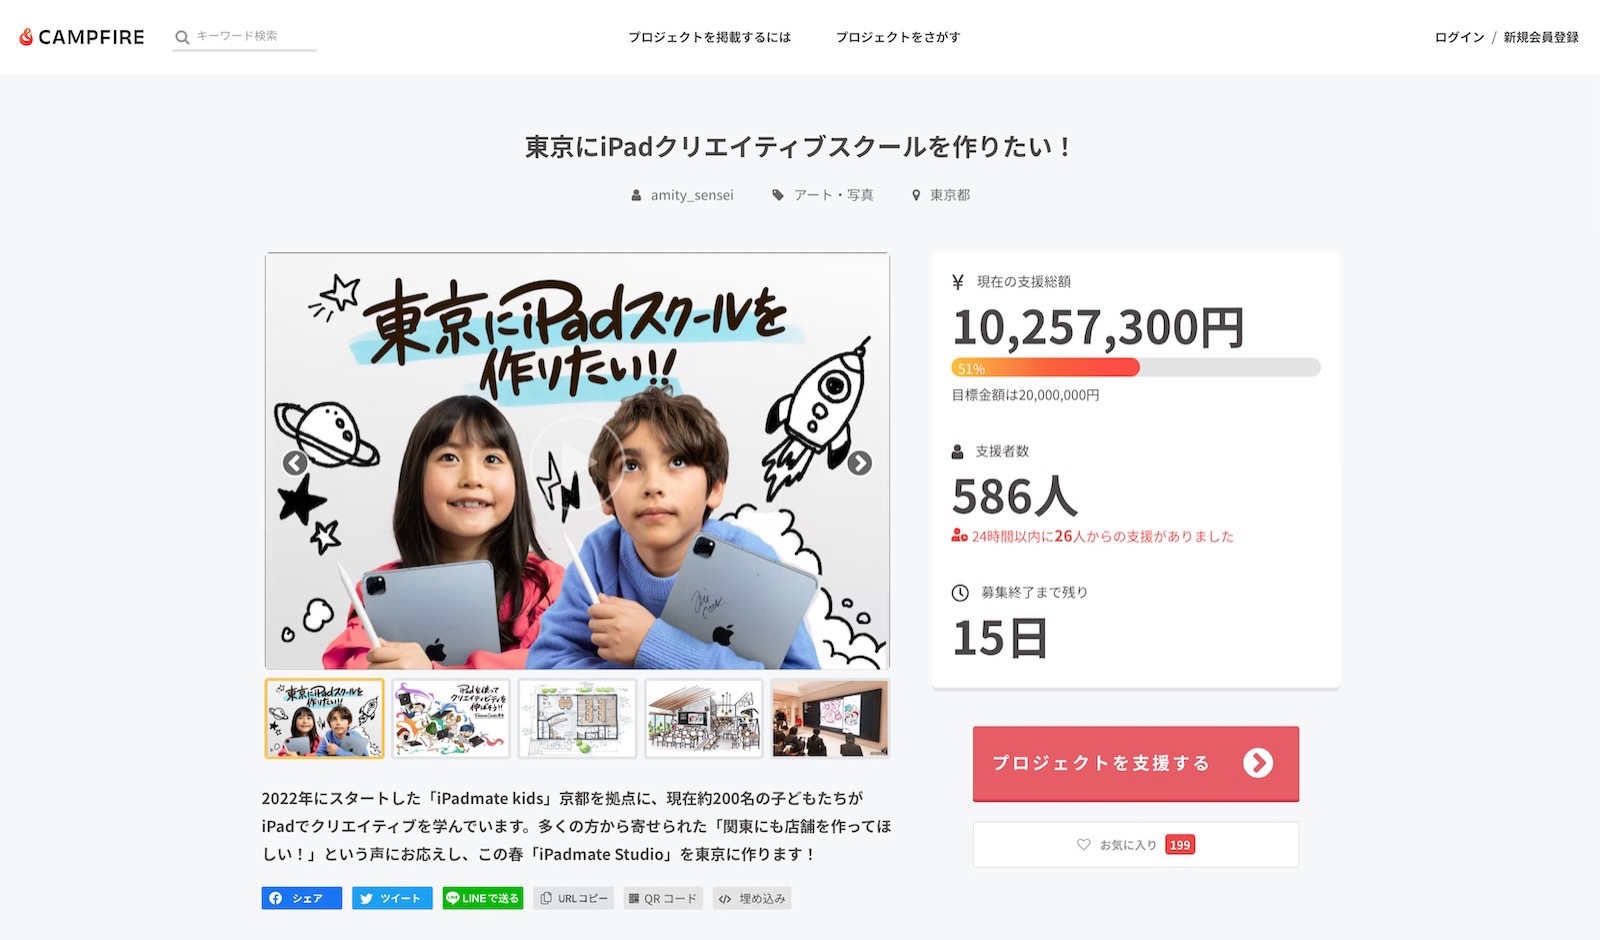 Ipad studio in tokyo crowdfunding